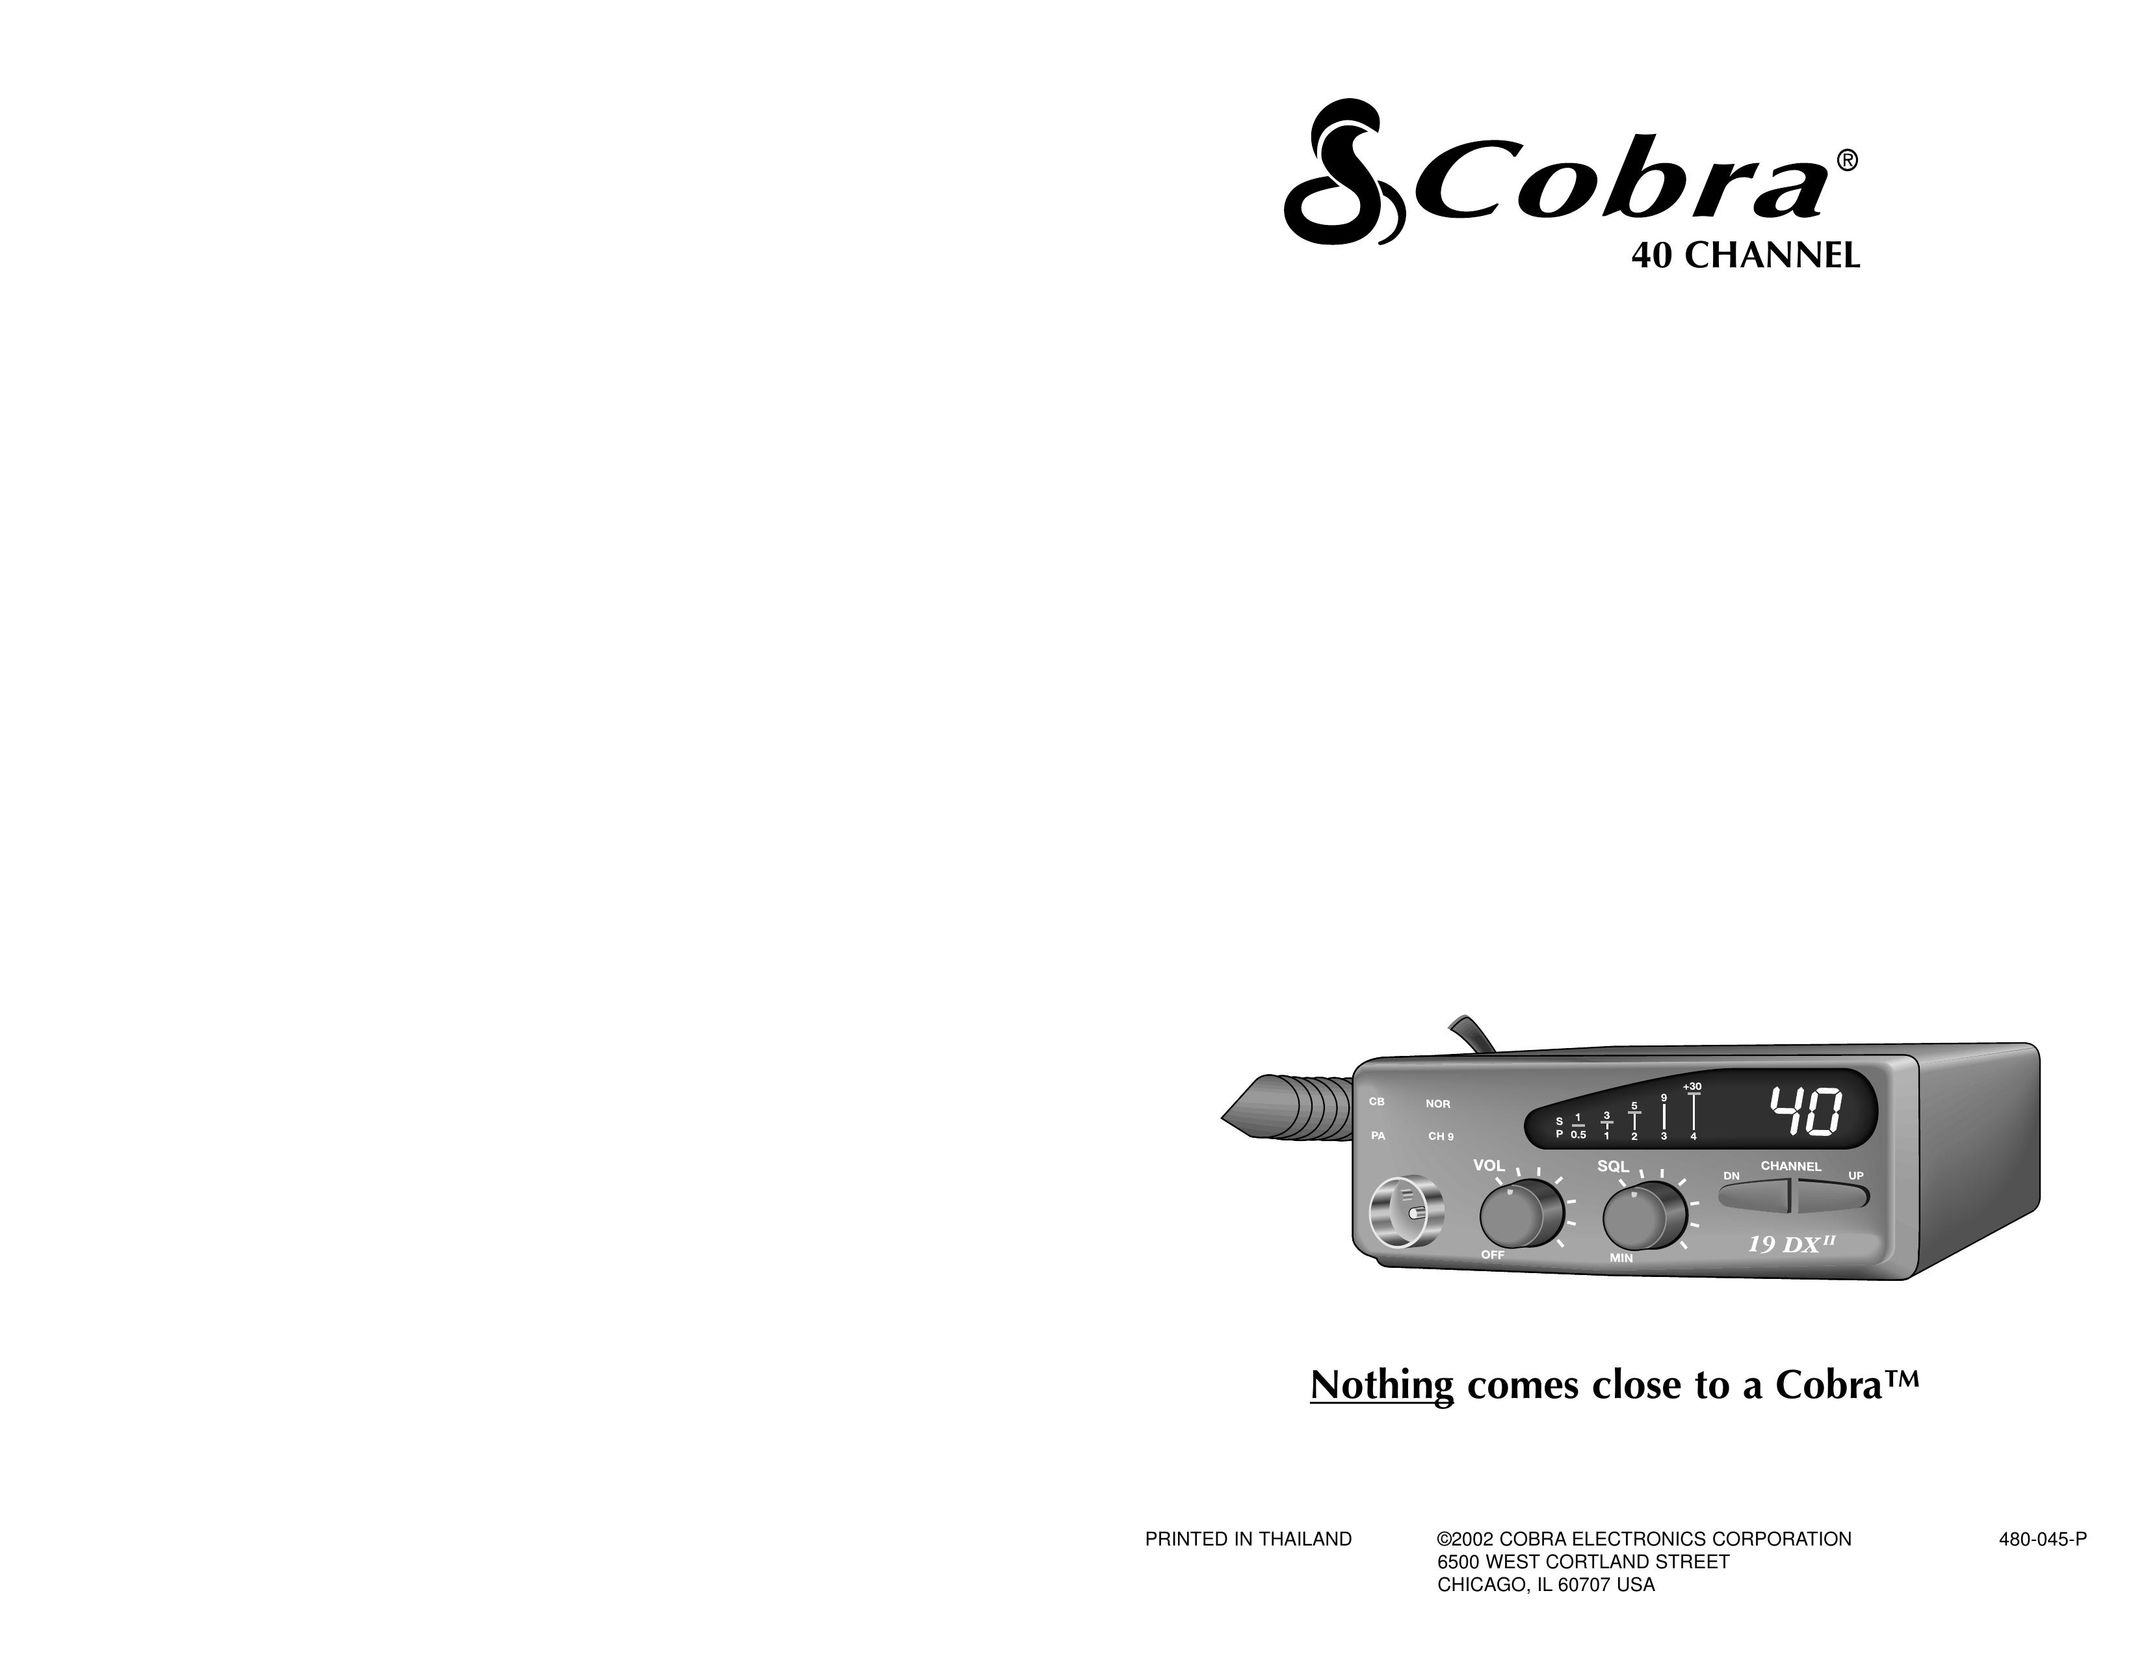 Cobra Electronics 19 DX II Two-Way Radio User Manual